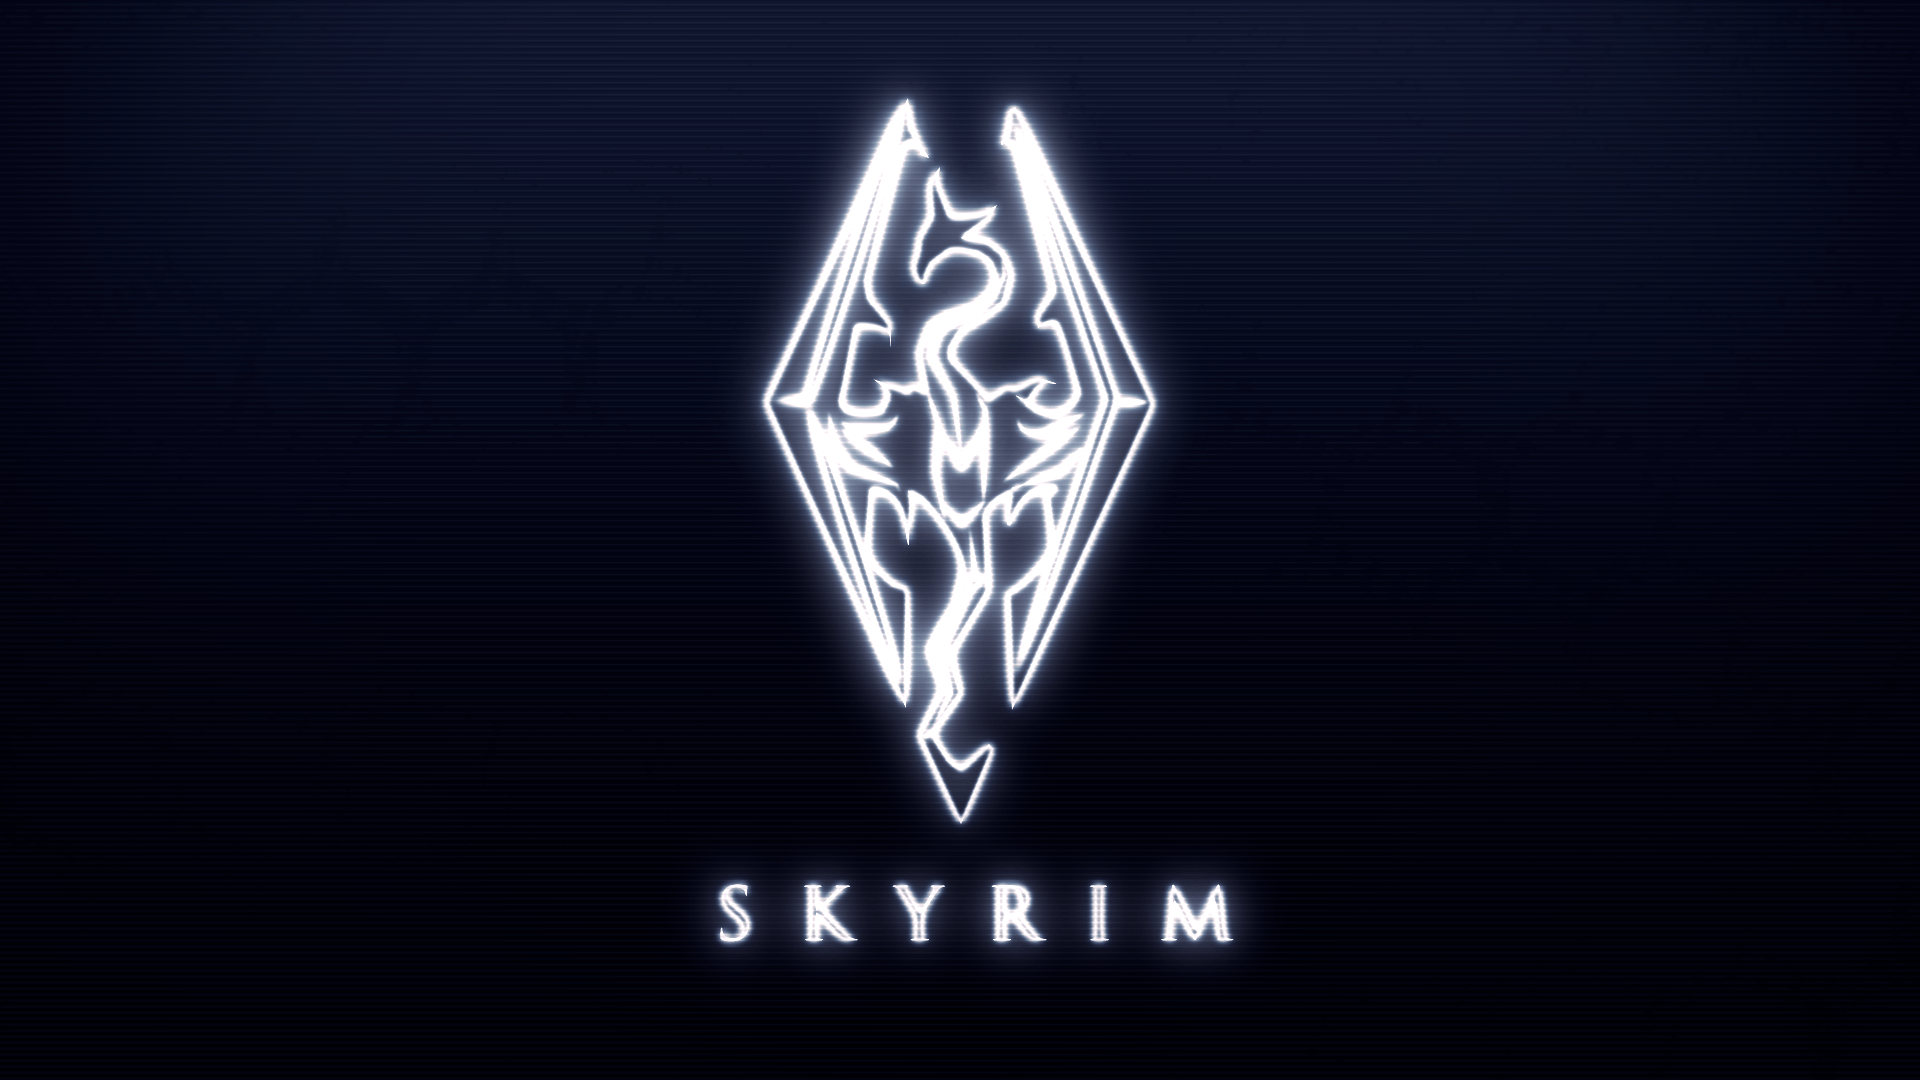 Skyrim Logo Wallpaper 1920x1080 Jpg